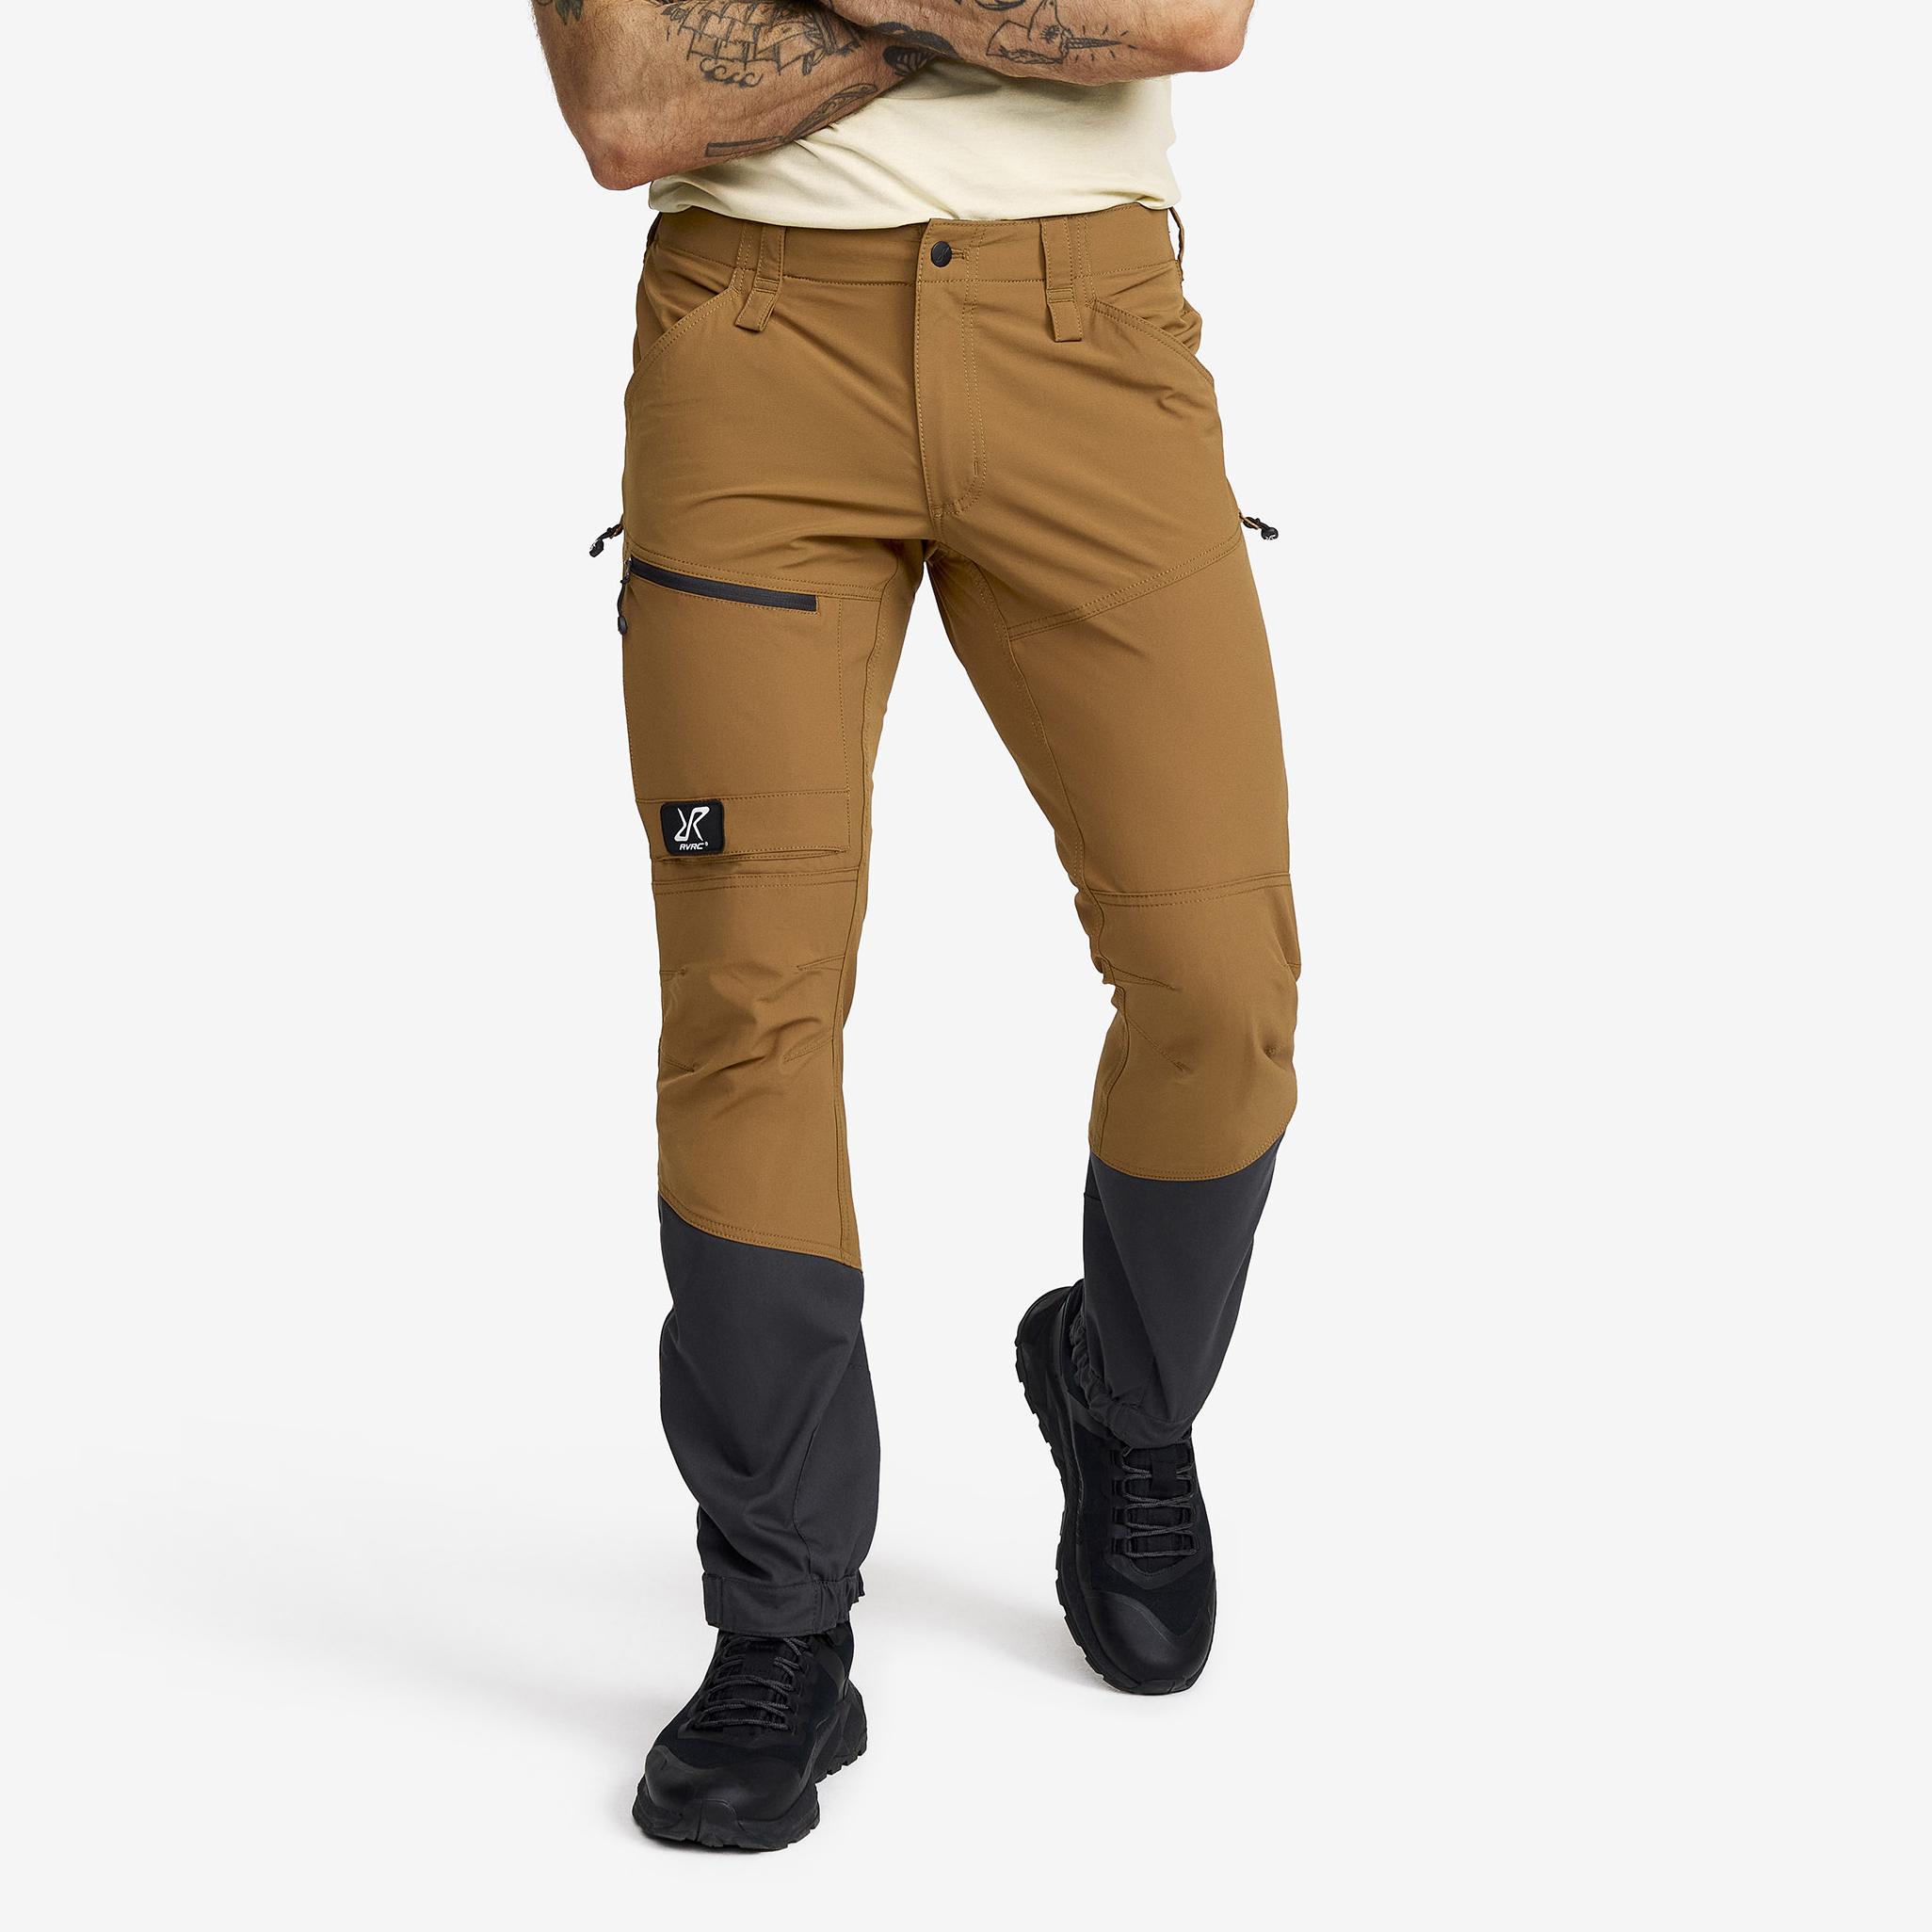 Range Pro Trousers Rubber/Anthracite Men